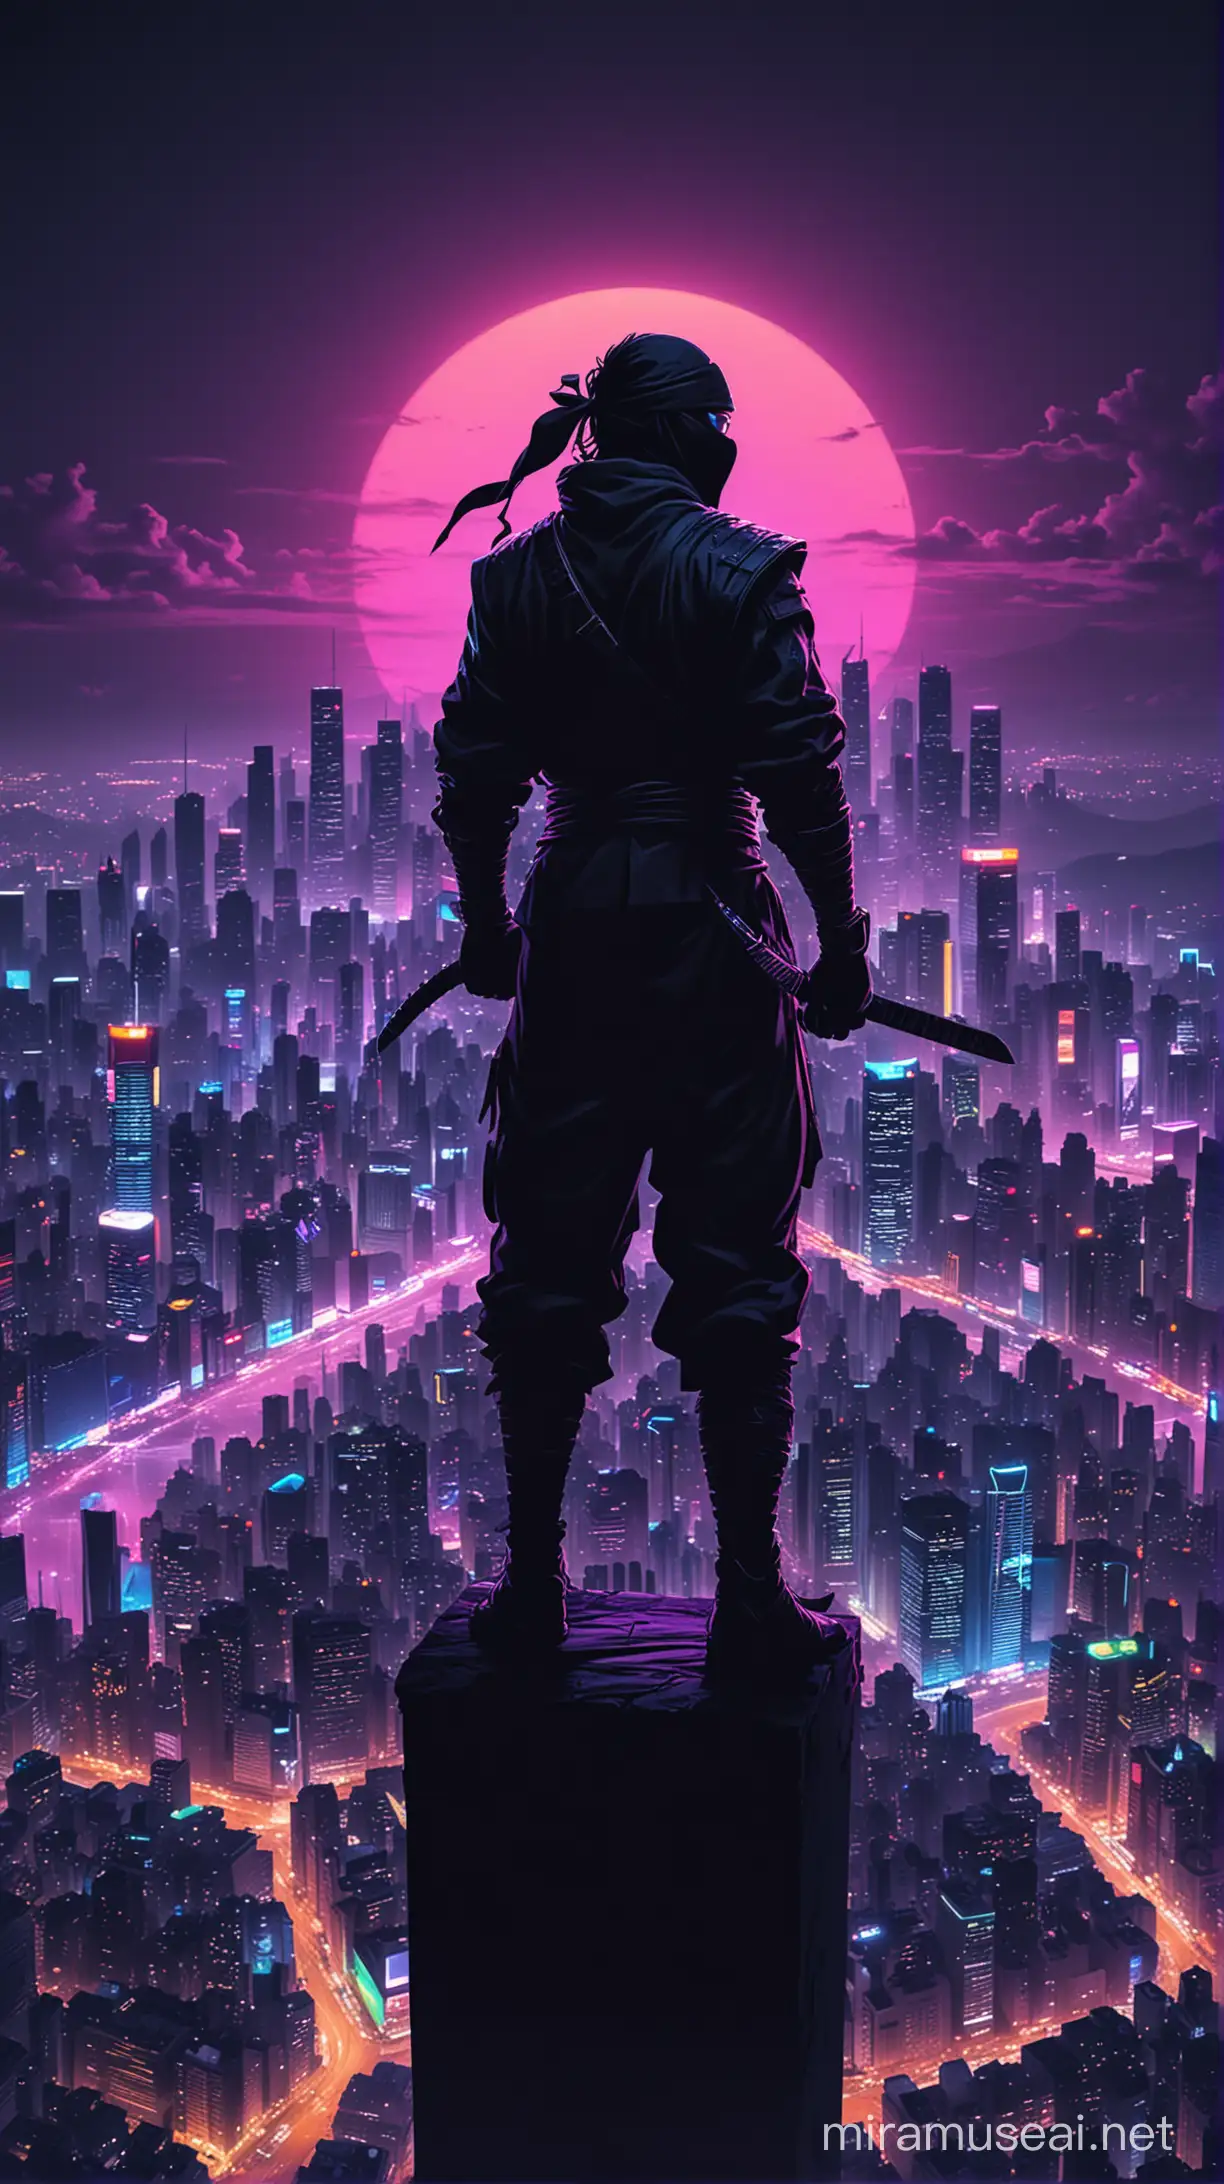 Neon Ninja Vibrant Cityscape with Shadowy Figure